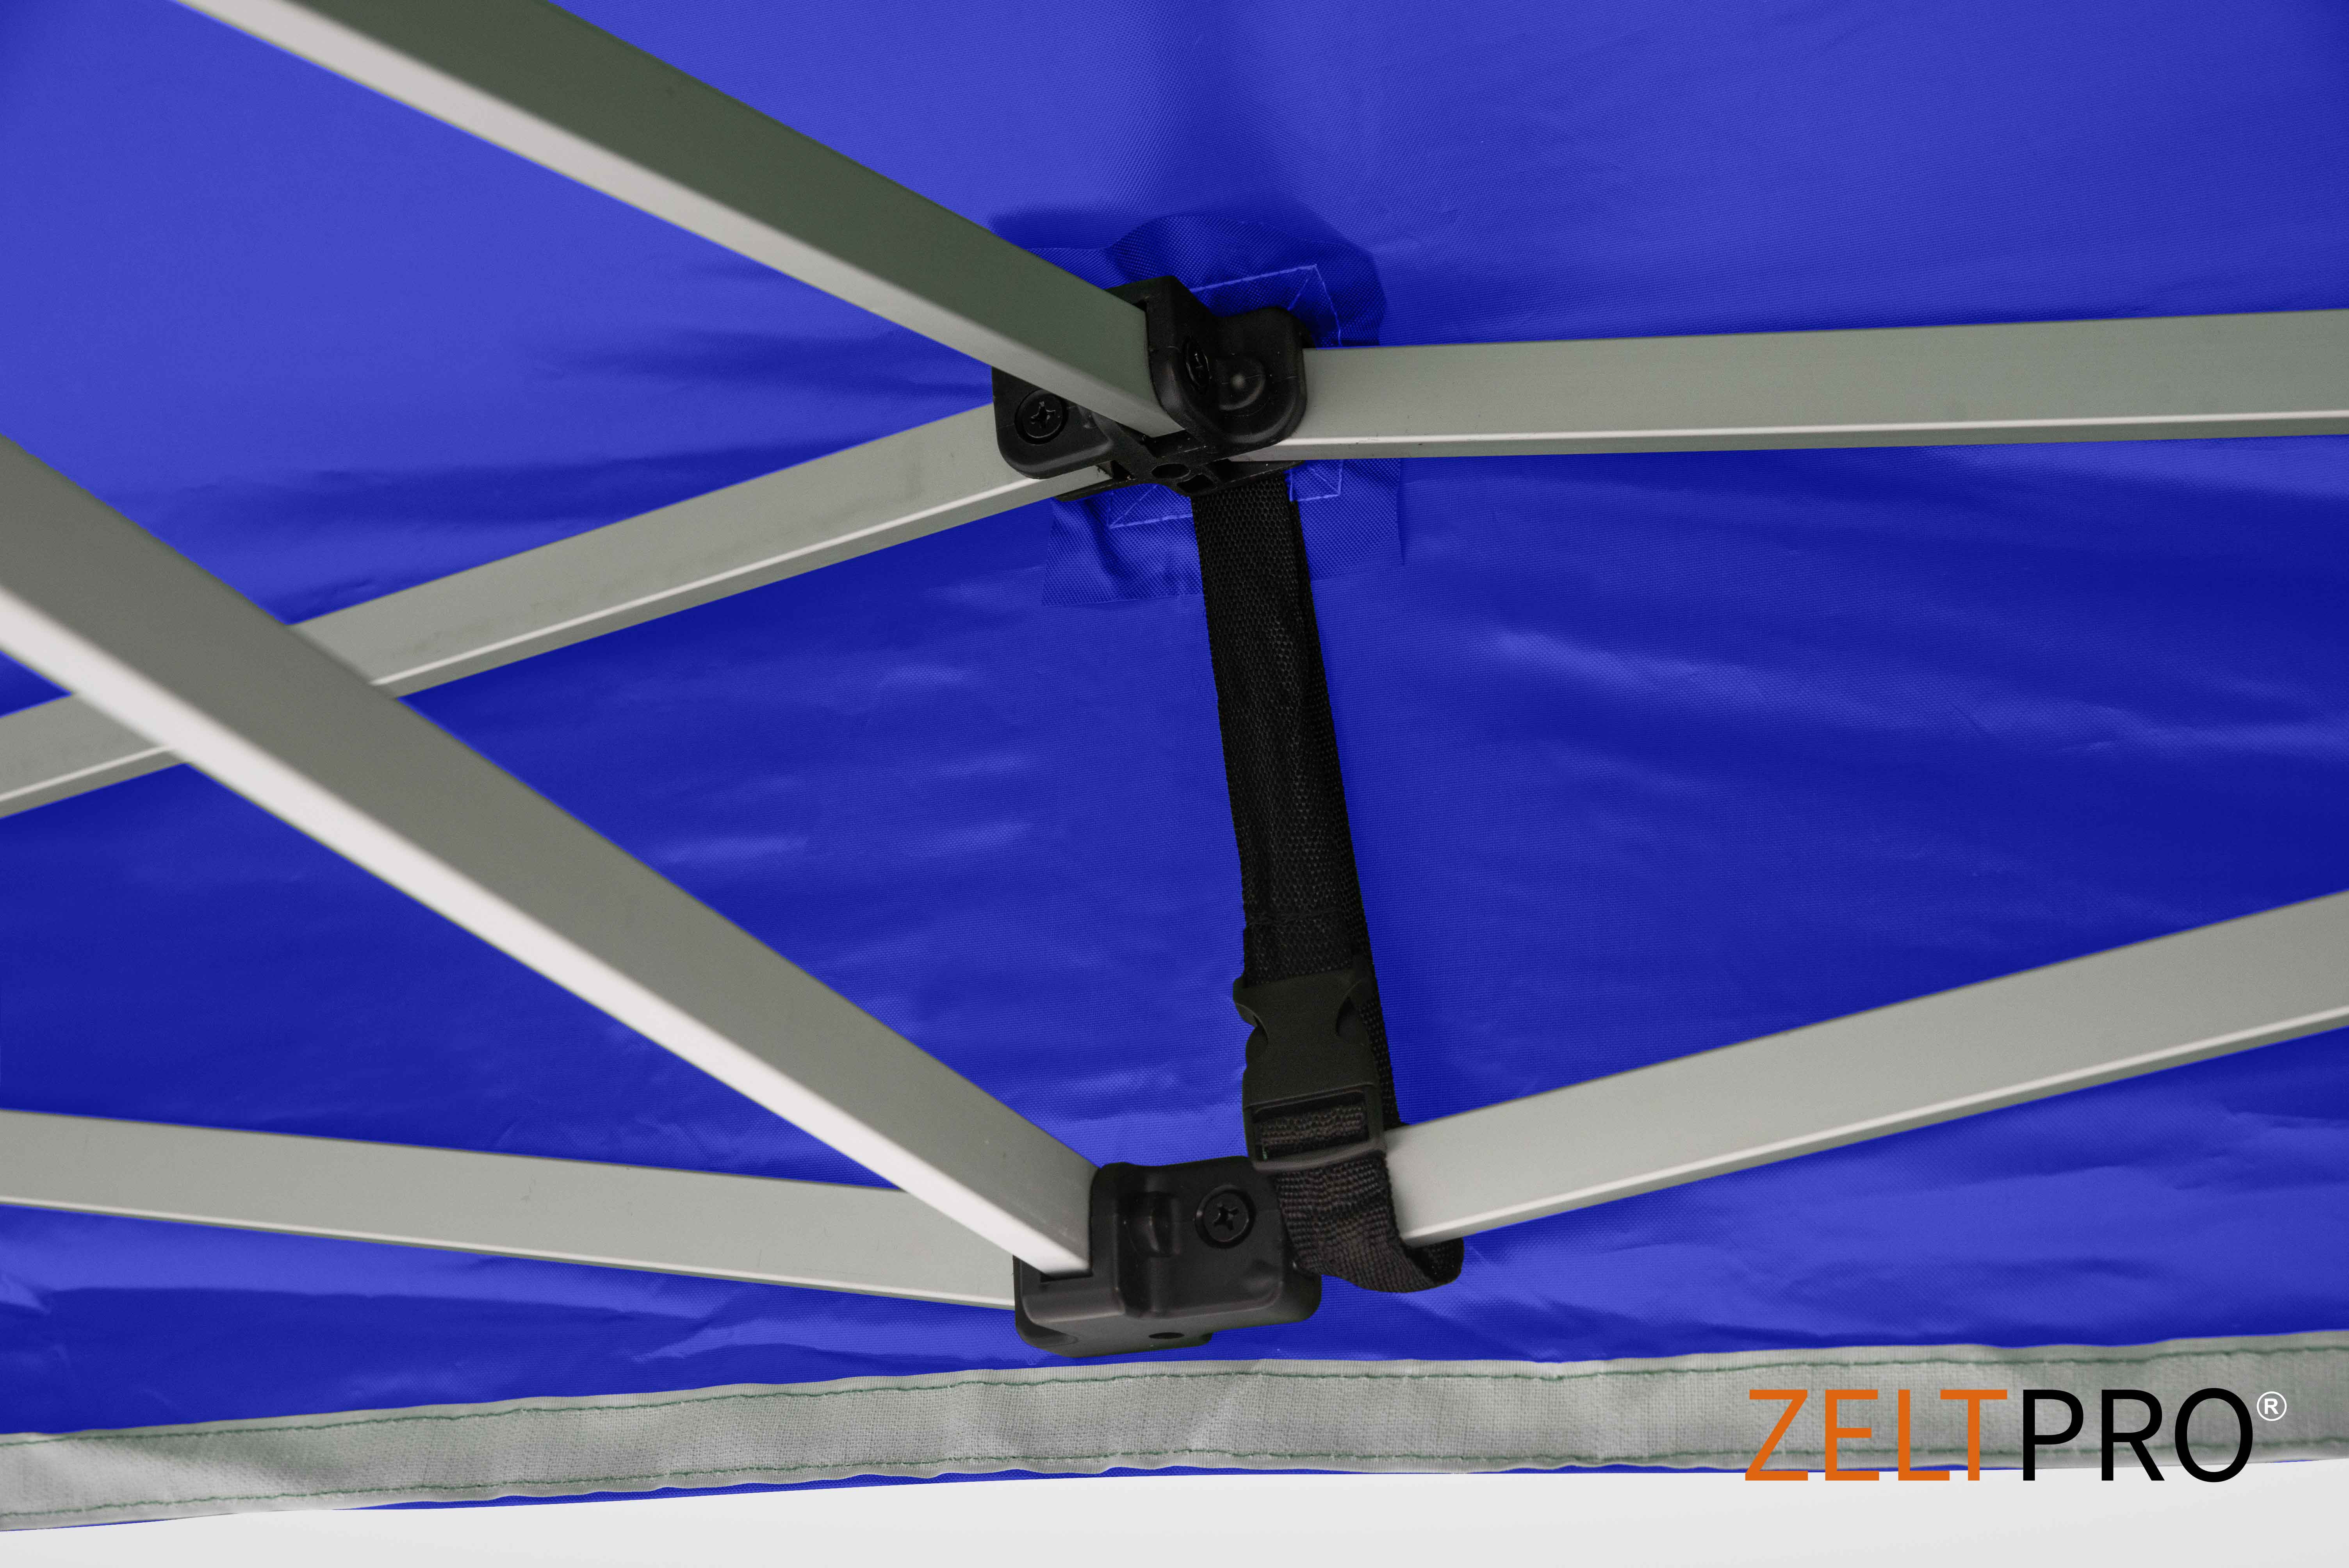 Prekybinė Palapinė 3x3 Mėlyna Zeltpro TITAN